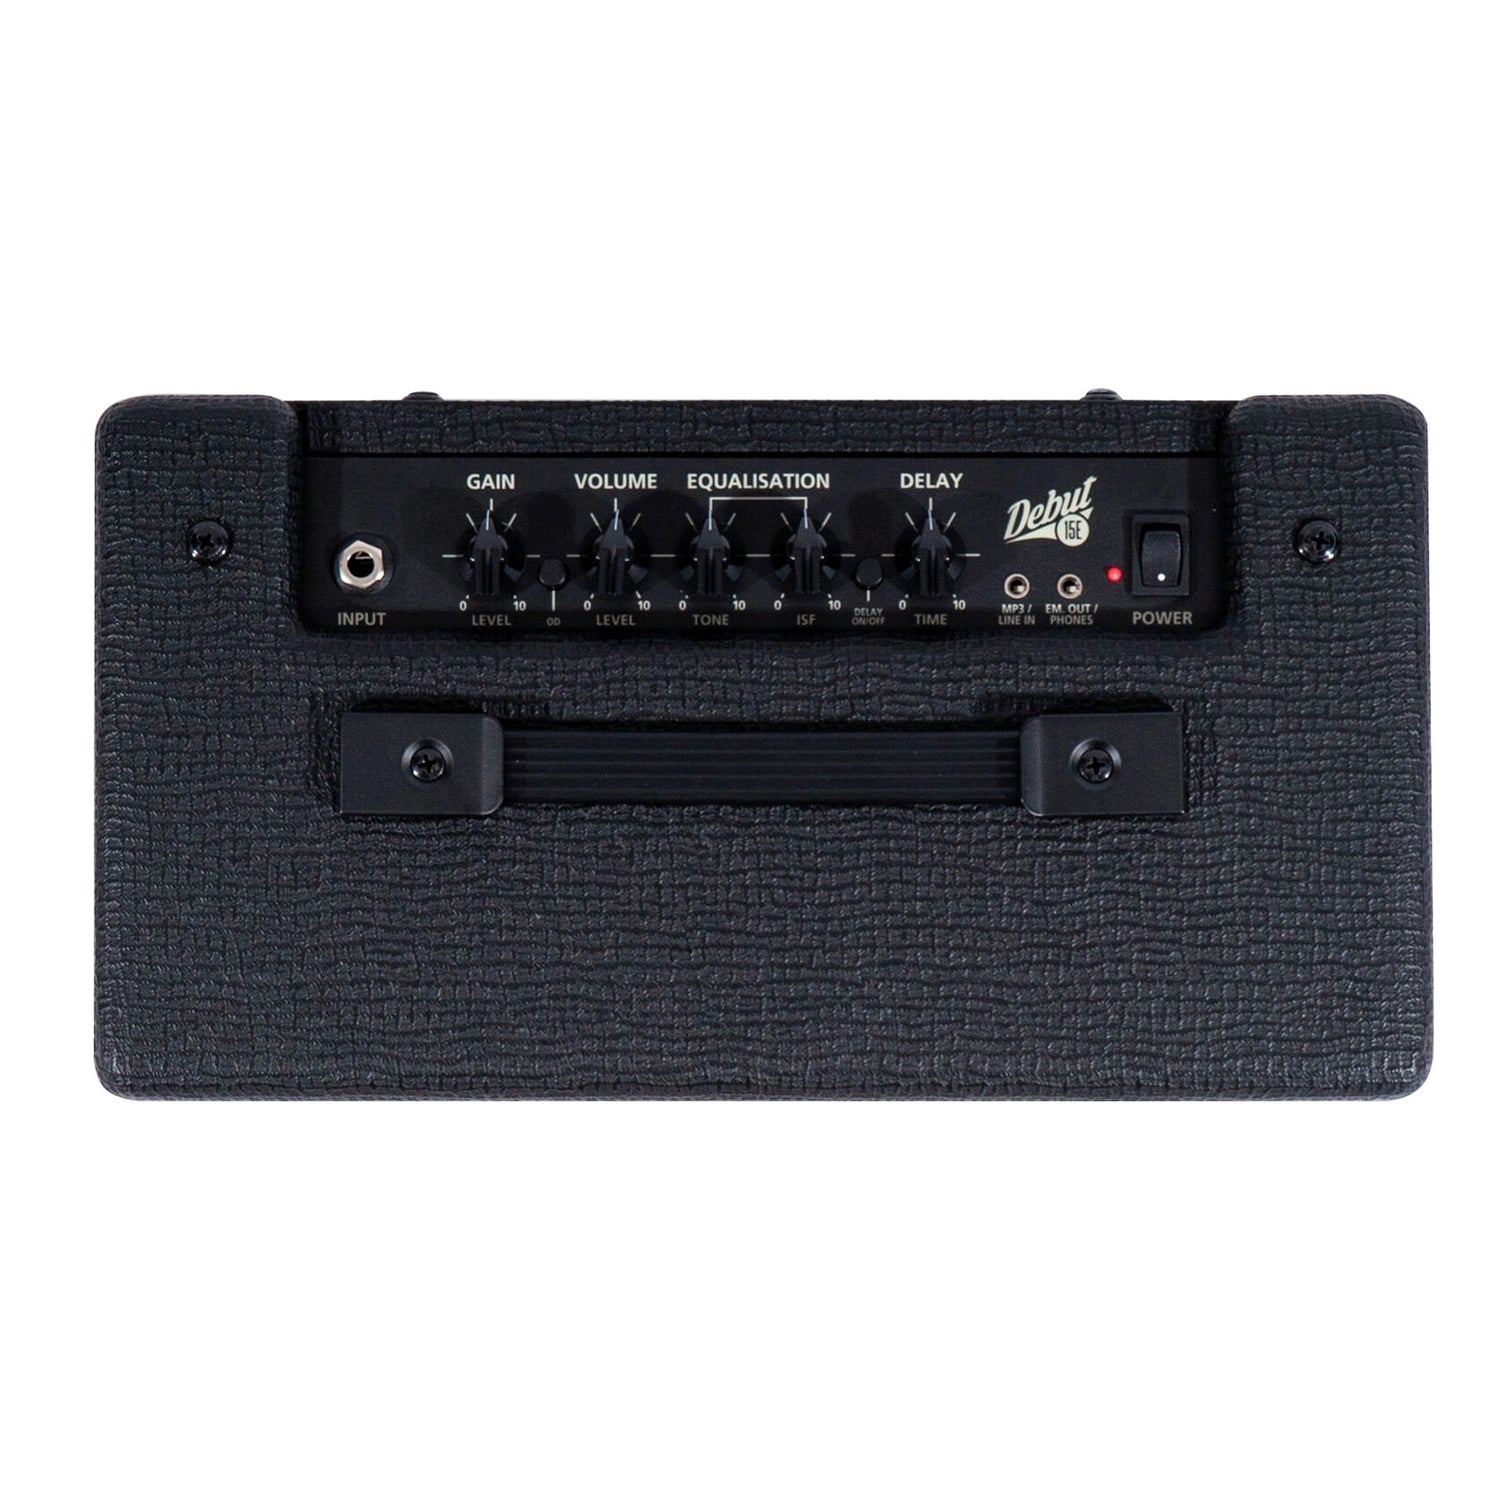 Blackstar Debut 10E 10-Watt 2x3" Guitar Combo Amplifier  - Black